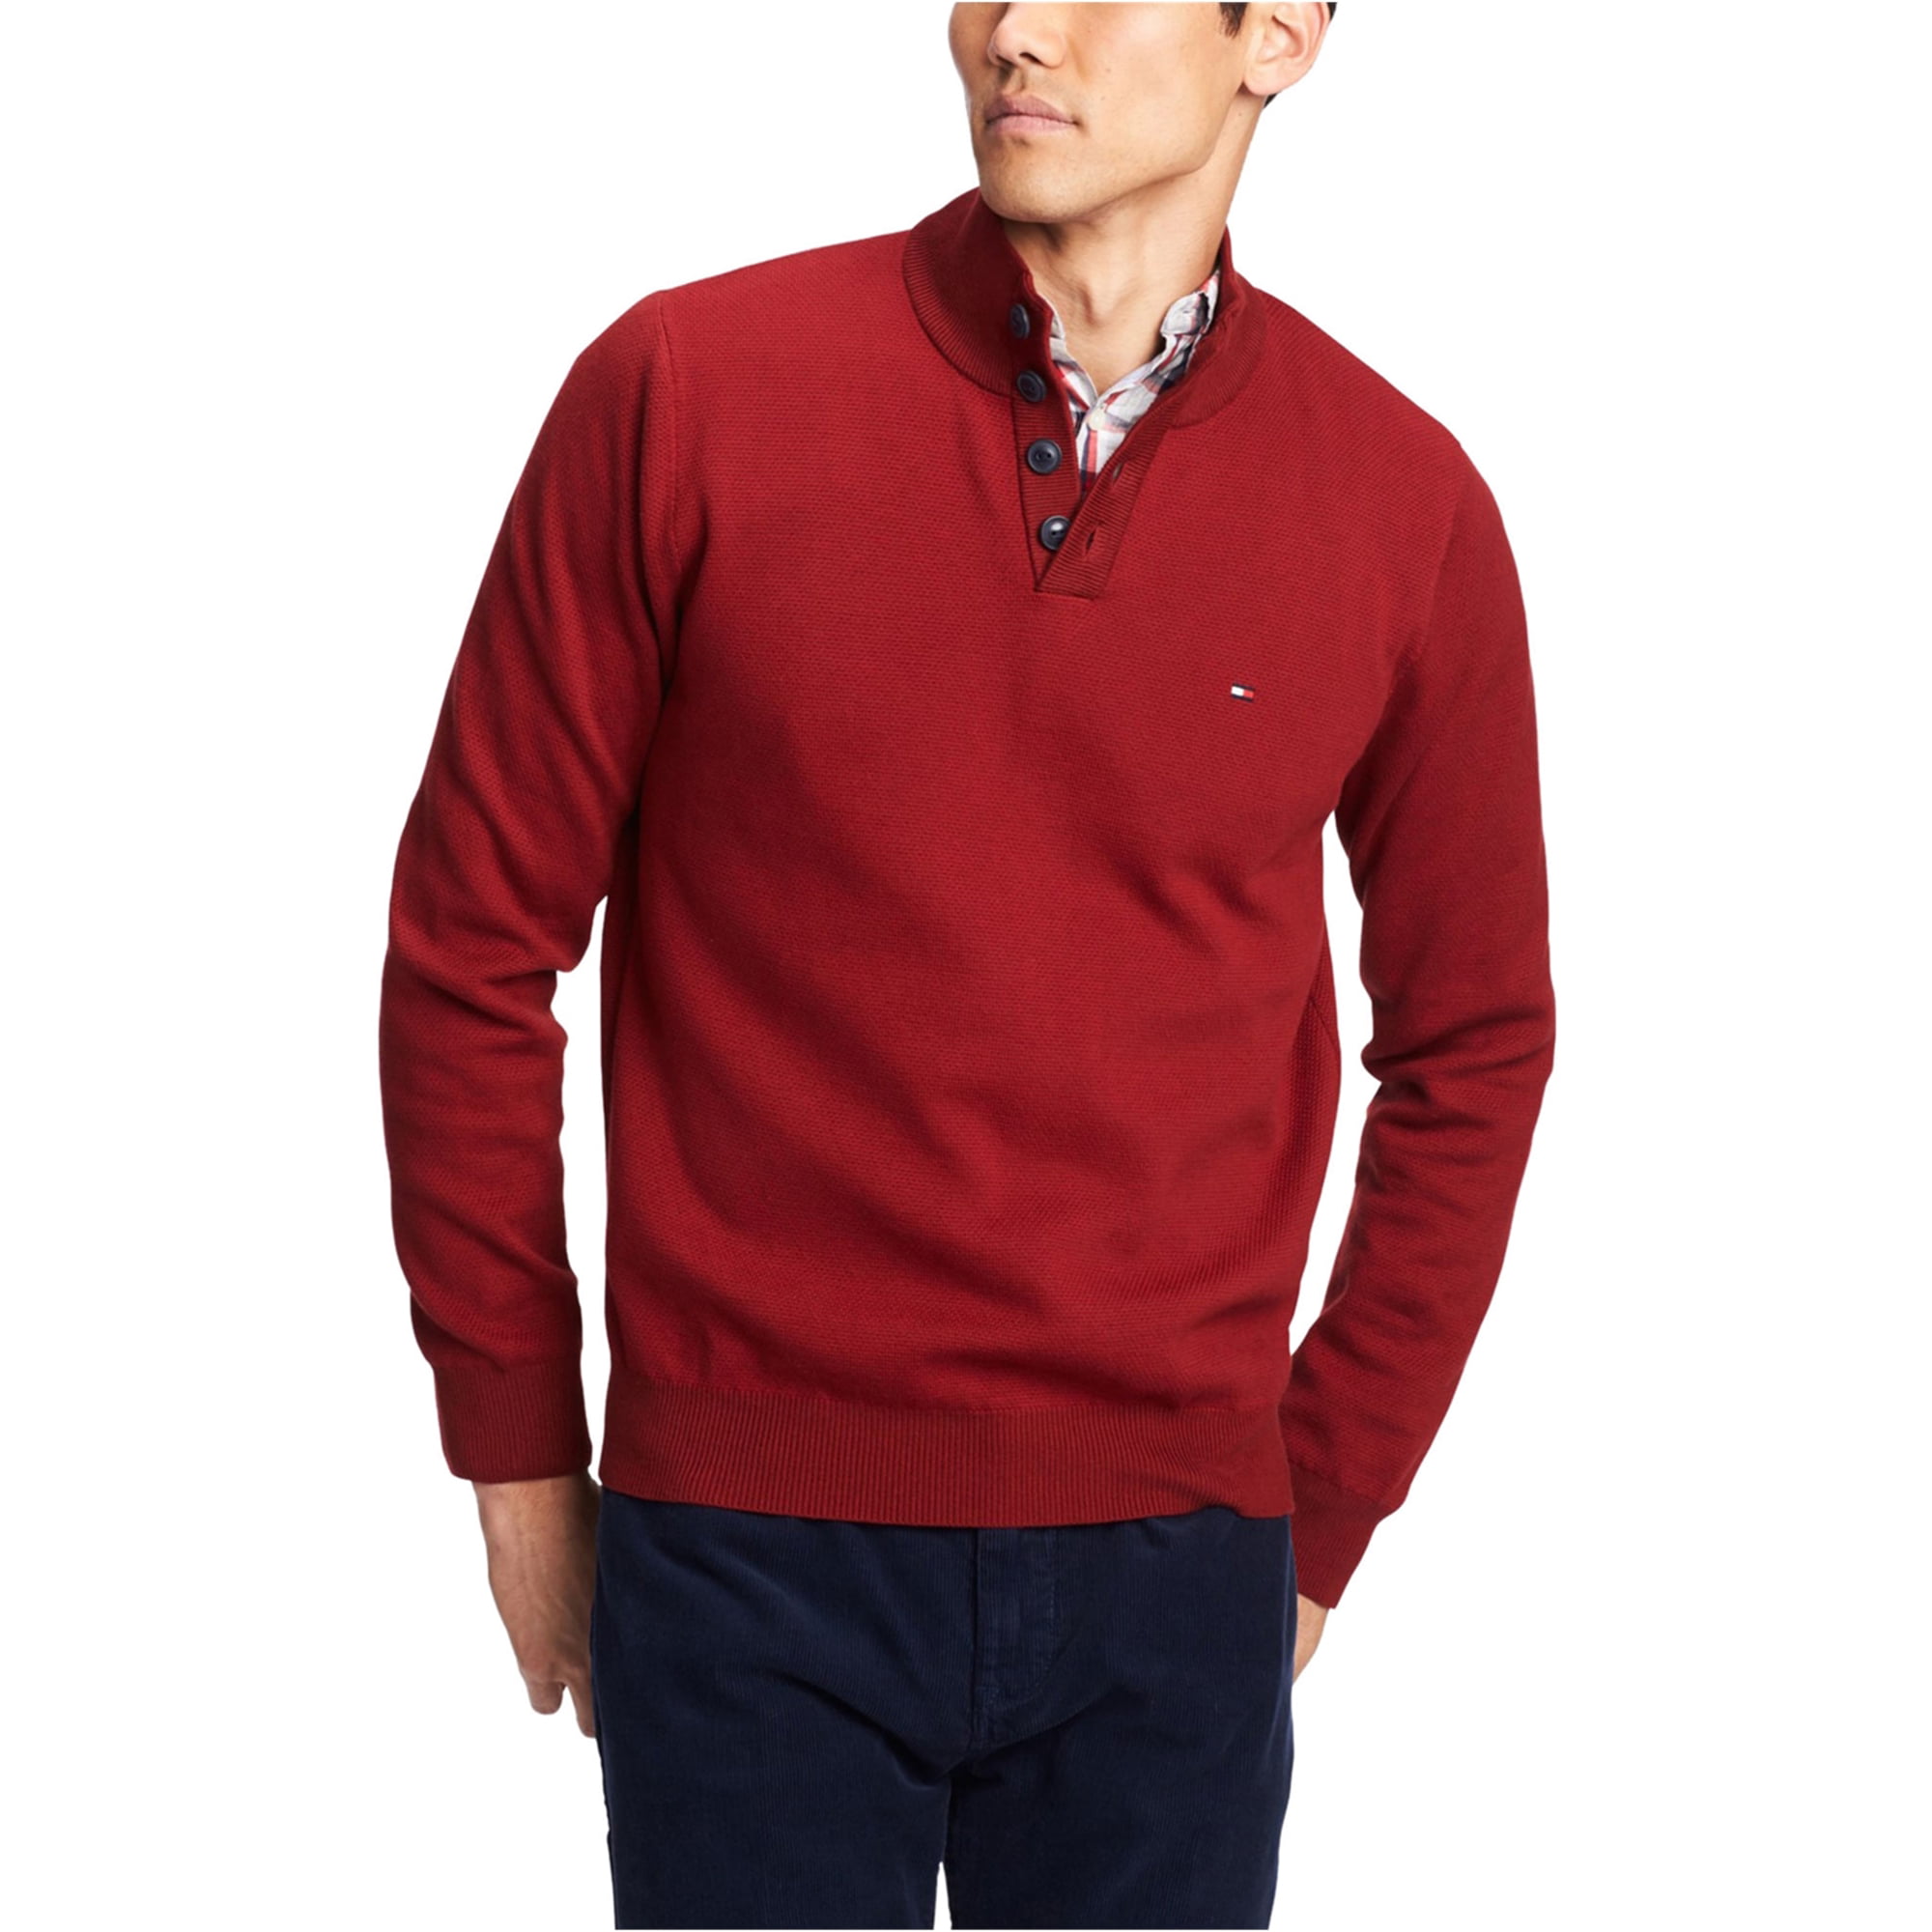 X-Future Men Stylish Striped Thicken Stand Collar Quarter Zipper Warm Pullover Sweater 